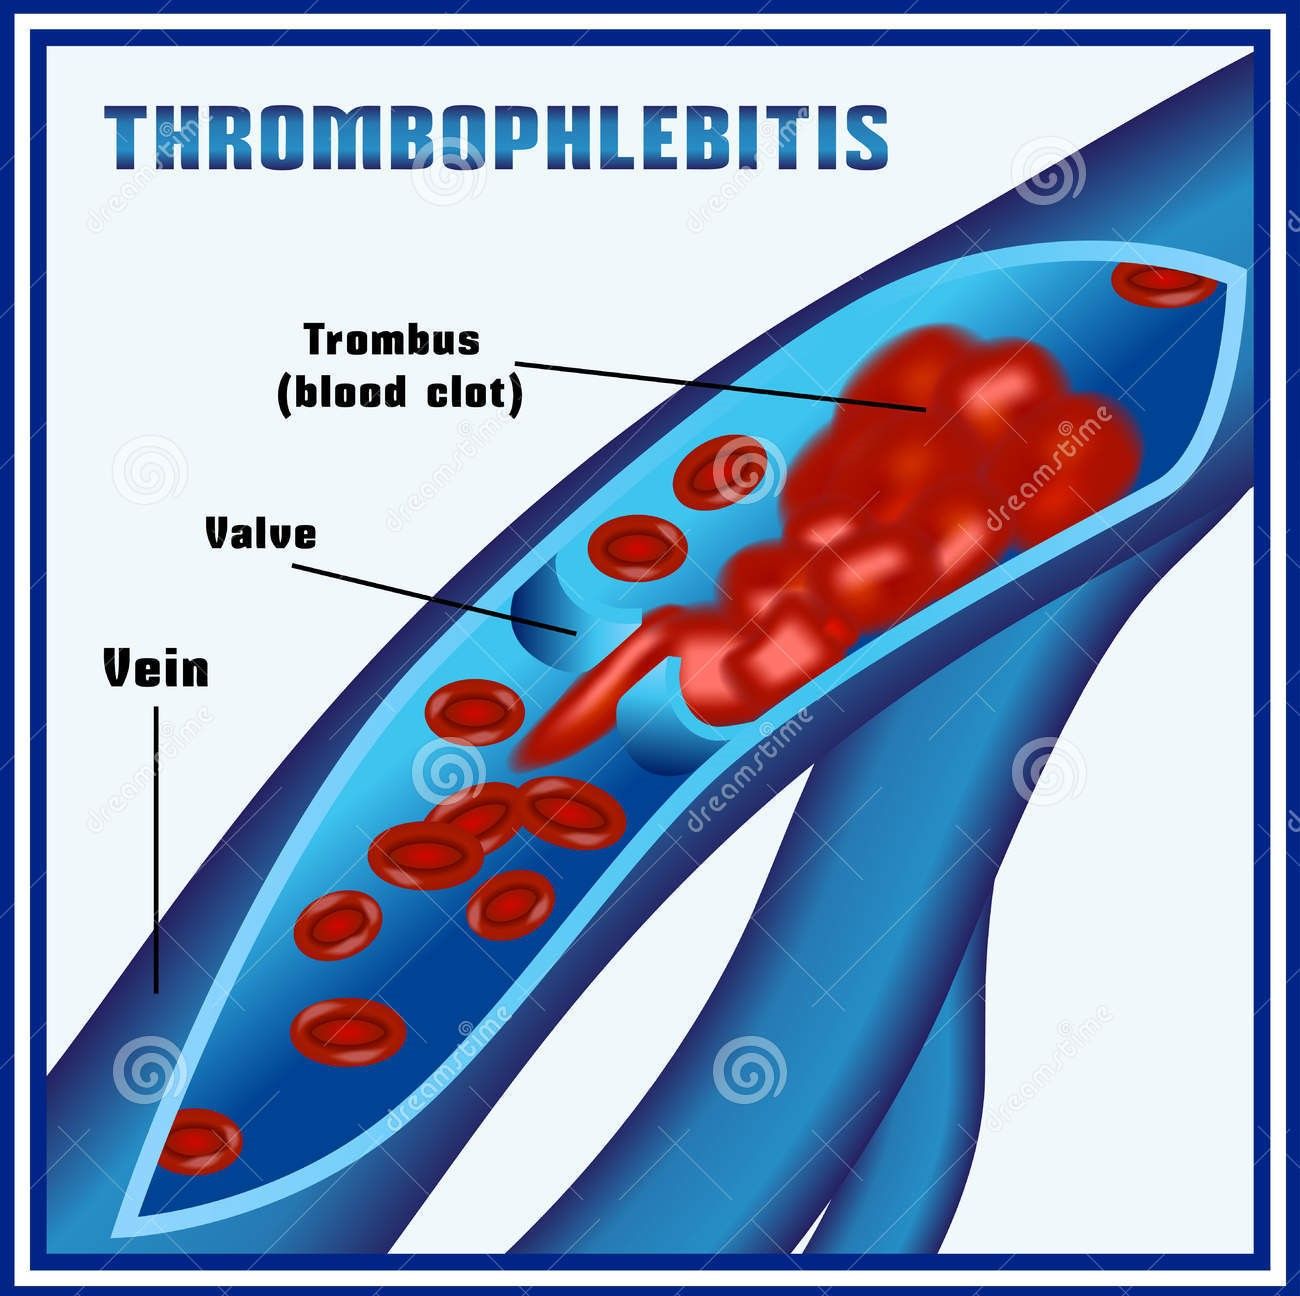 Tromboflebitis superficial de la vena toracoepigástrica: enfermedad de Mondor